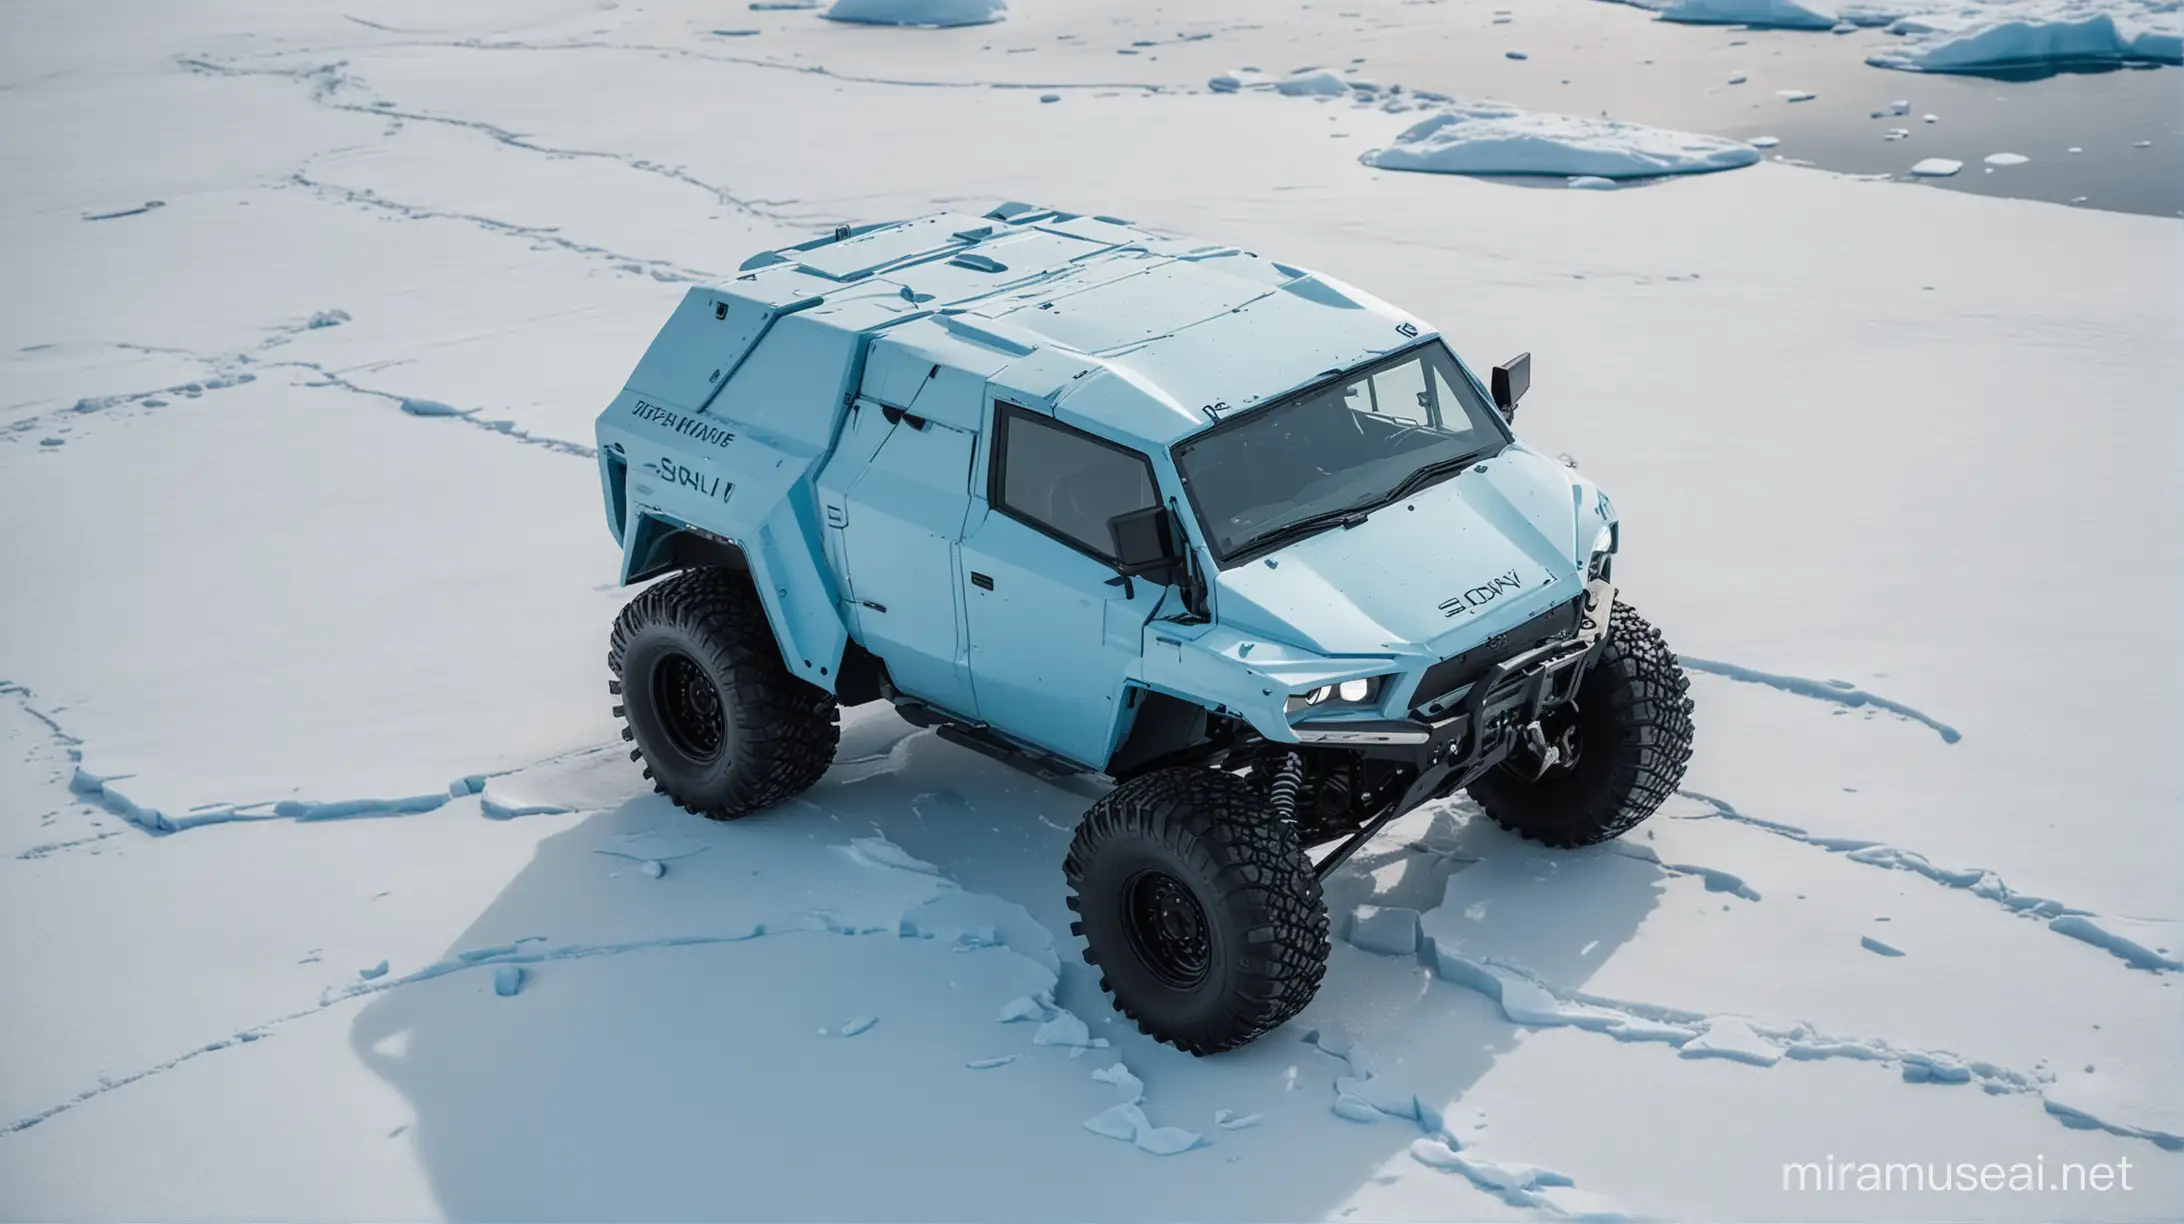 Futuristic Cybertruck on Glacier IceBlue Innovation in Extreme Antarctica